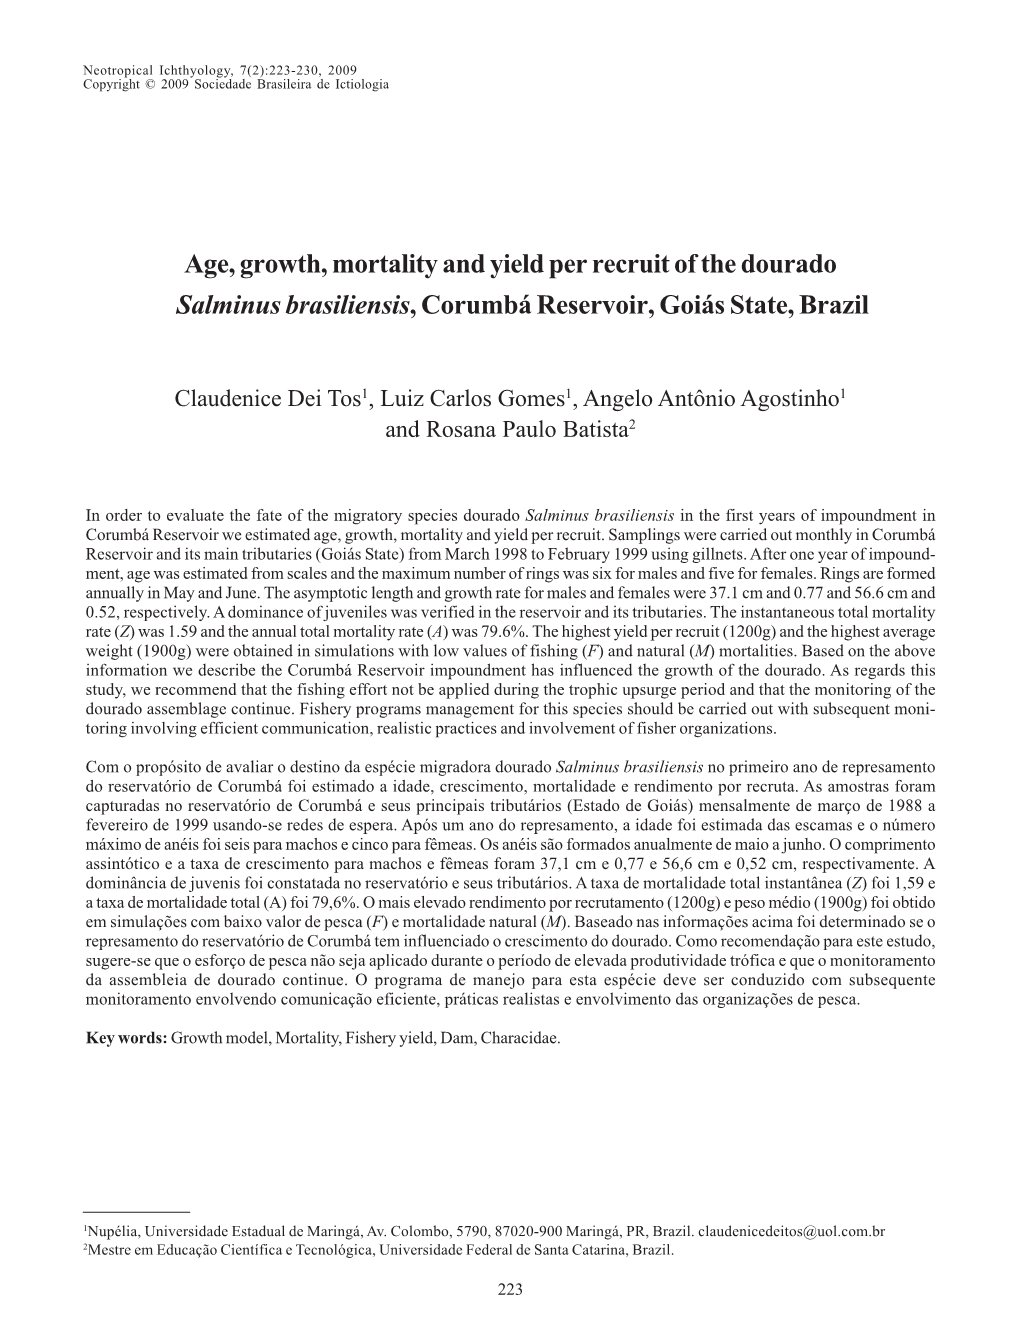 Age, Growth, Mortality and Yield Per Recruit of the Dourado Salminus Brasiliensis, Corumbá Reservoir, Goiás State, Brazil